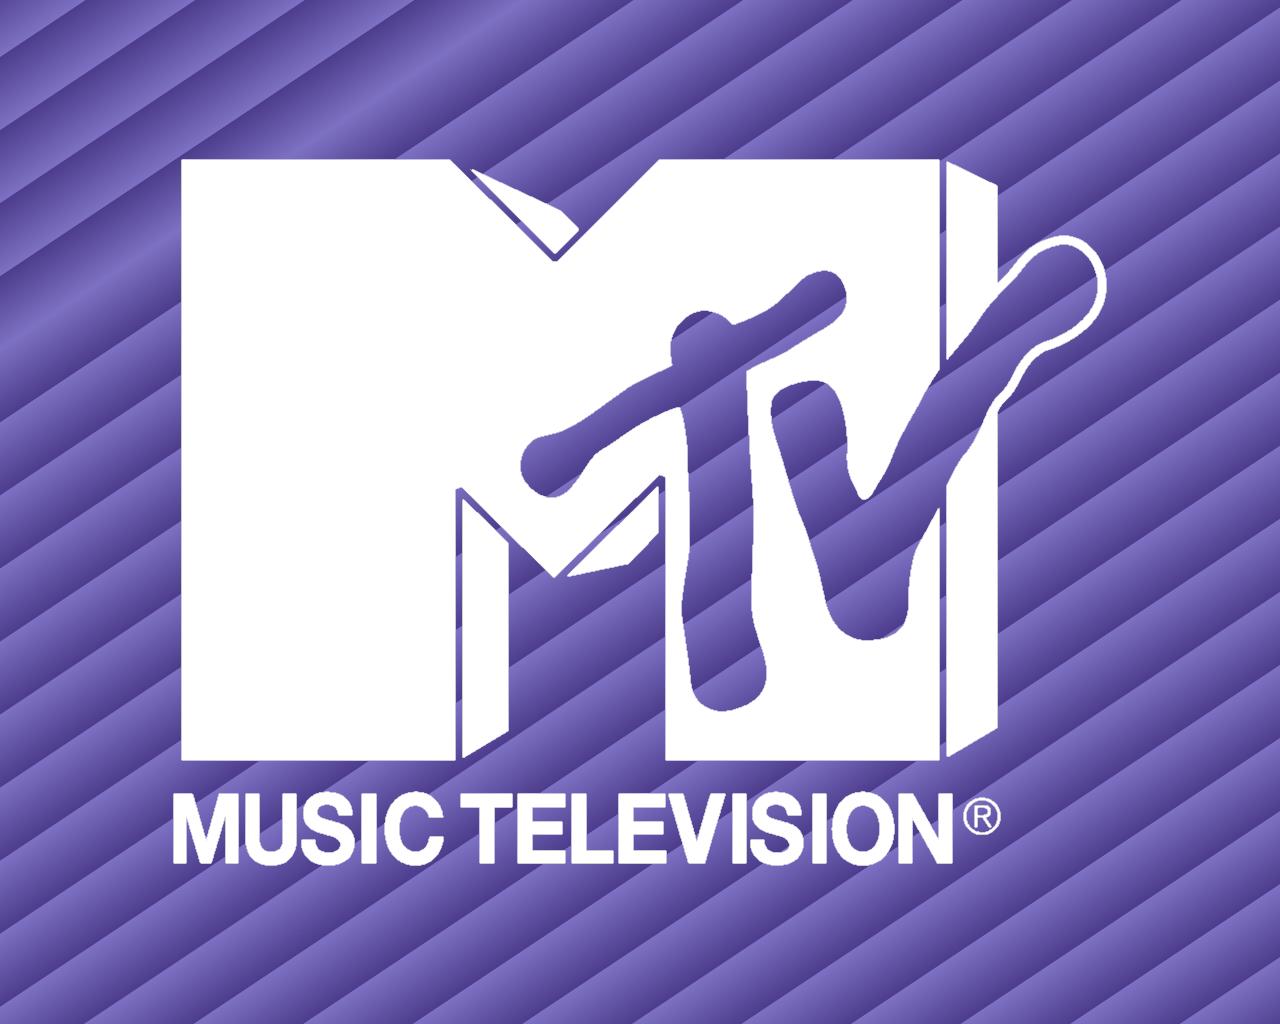 More information about "Vueling EC-KDH MTV"